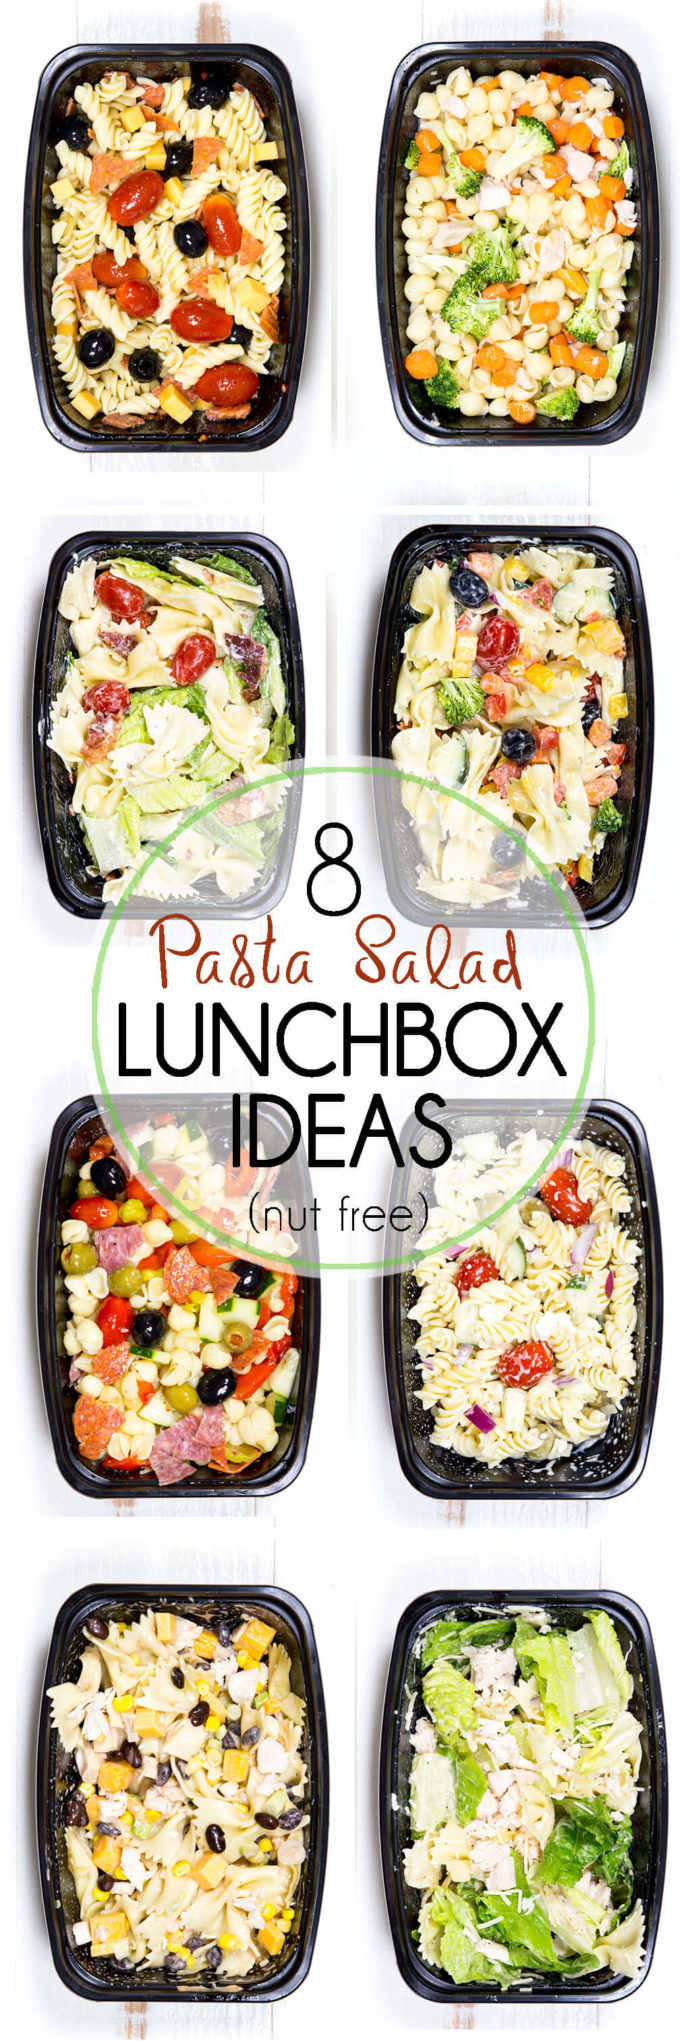 https://www.eazypeazymealz.com/wp-content/uploads/2016/06/Pasta-Salad-Lunchbox-Ideas-PIN.jpg